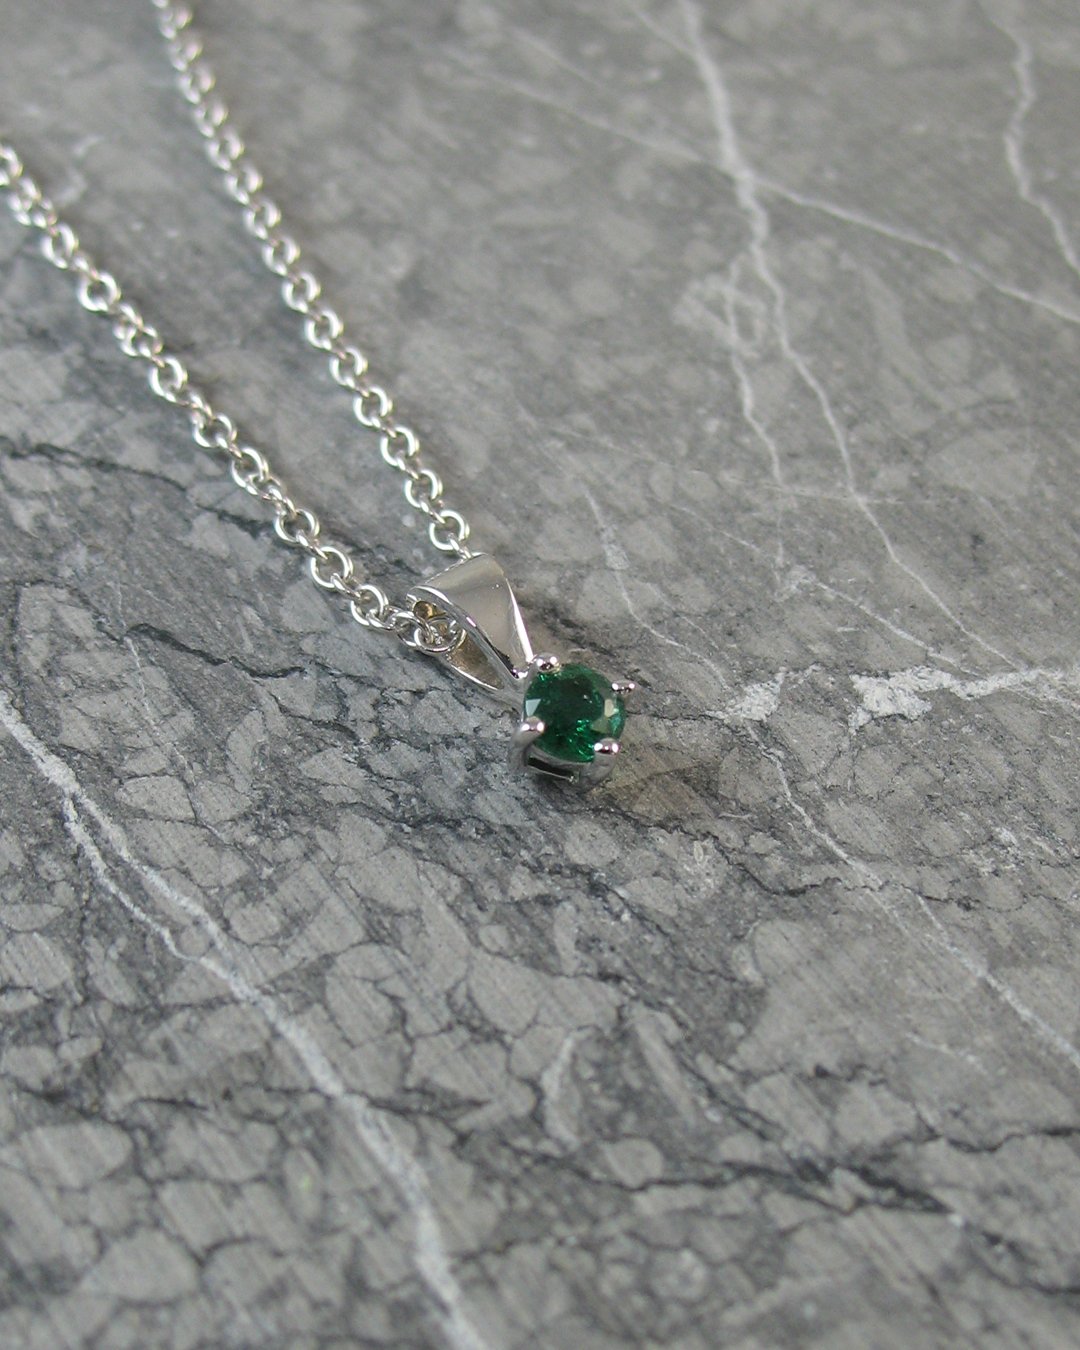 A striking emerald pendant